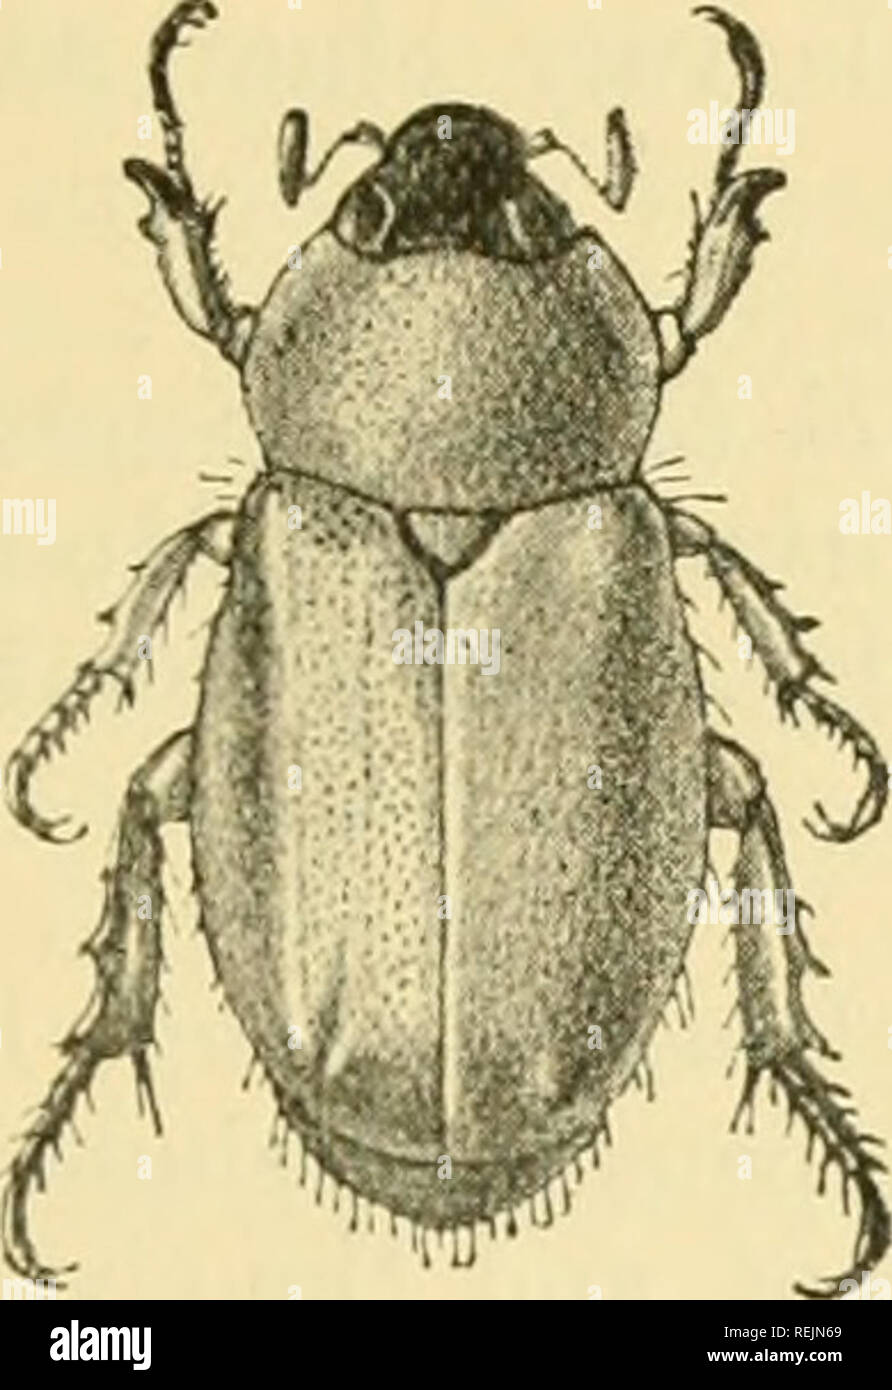 . Coleoptera: Lamellicornia. Scarabaeidae. ANOMAI.A. 145 Lemjih, 22 mm. ; breadth, 12 mm, Ceylon : Trincomali (C. F. S. Baker, E. E. Green, Sept.). Ty2}e iu tlie British Museum, 122. Anomala elata. (Plate II, fig. 22.) Melolontha elata, Fabr., Ent, Syst. i, 2, 1792, p. 161 ; id., Syst. Eleut. ii, 1801, p. I(i7. ? Melolontha varians, Oliv,, Ent, i, 5, 1789, p, 78, pi. 10, tig. 123. Anomala elata, Burm., llandb. Ent. iv, 1, 1844, p. 233, Testaceous, with the head, the extreme front and hind margins of the pronotum, all the margins of the elytra, the hind tibiae, the extremities of the other tibi Stock Photo